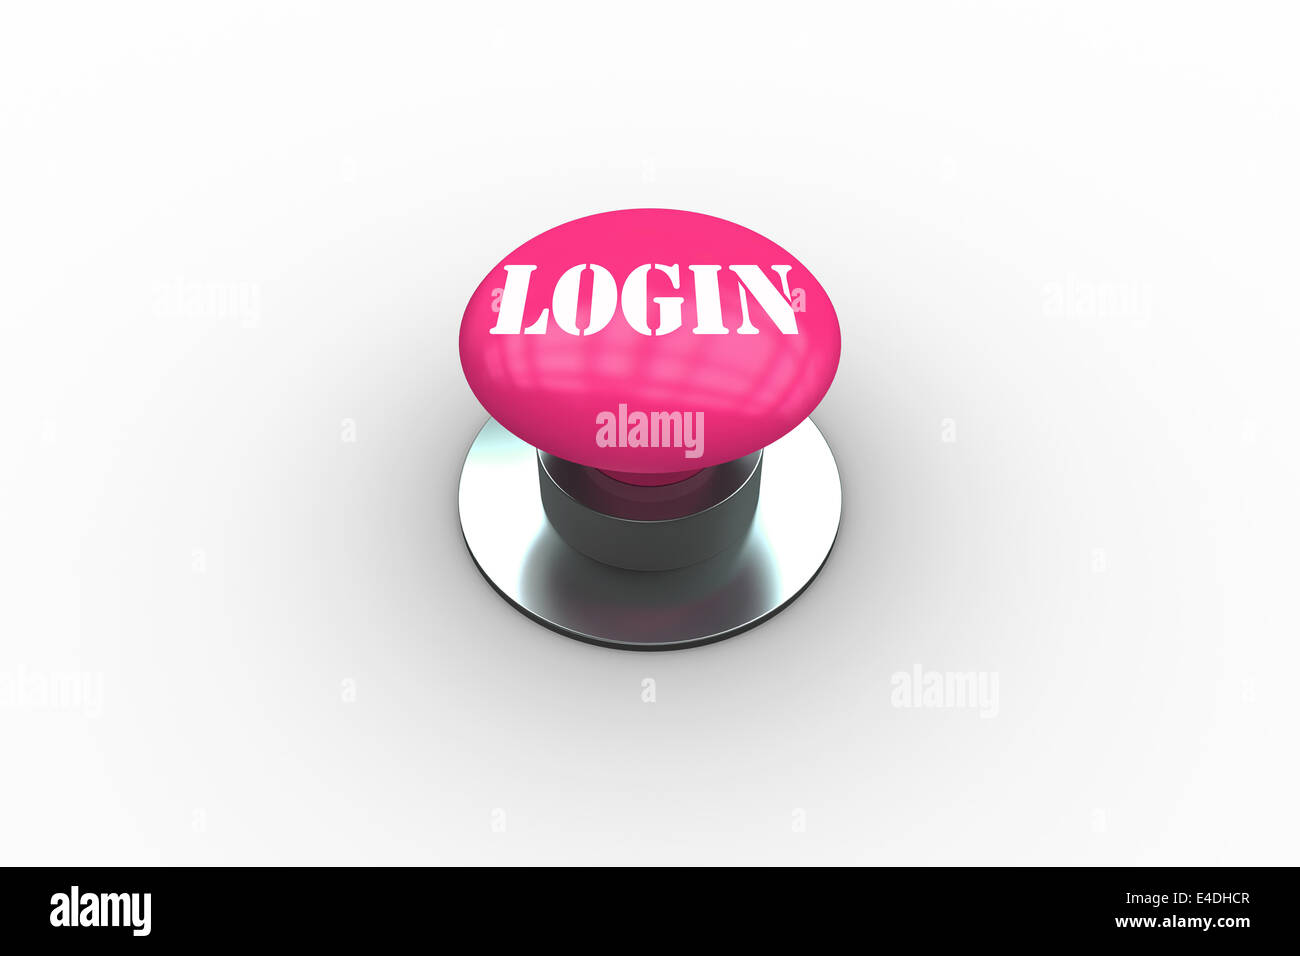 Login on pink push button Stock Photo